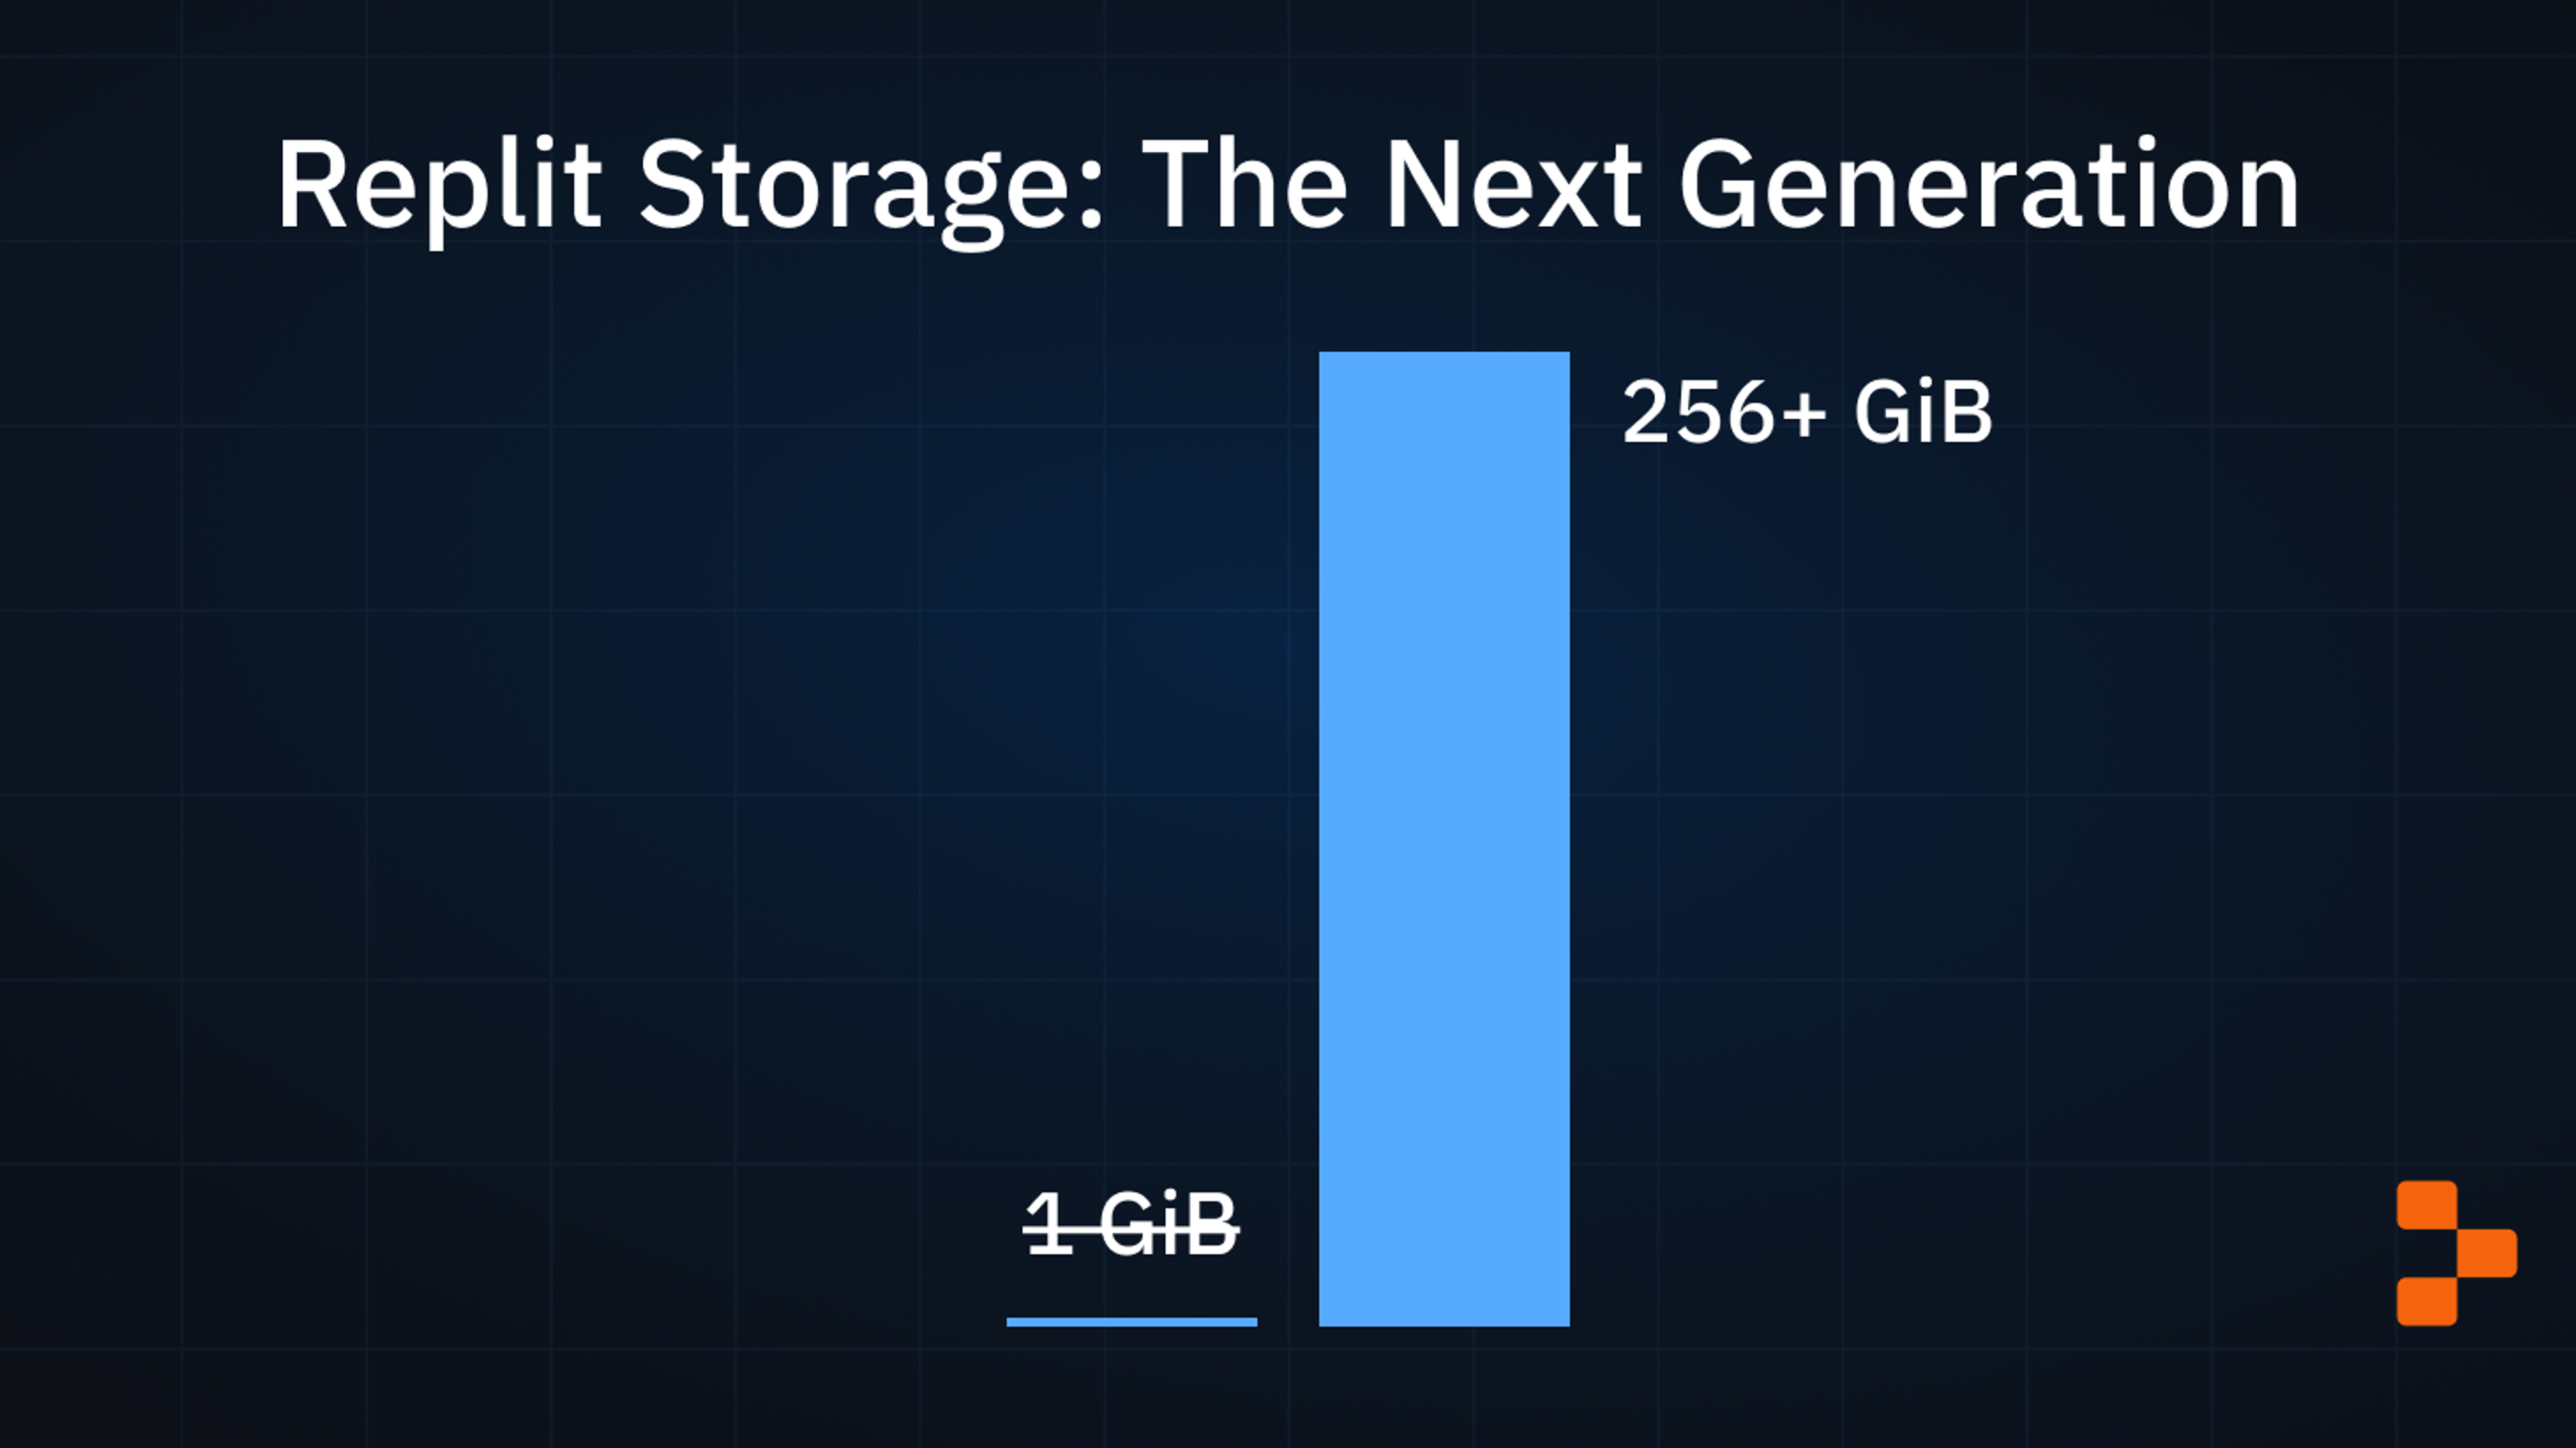 Replit Storage: The Next Generation